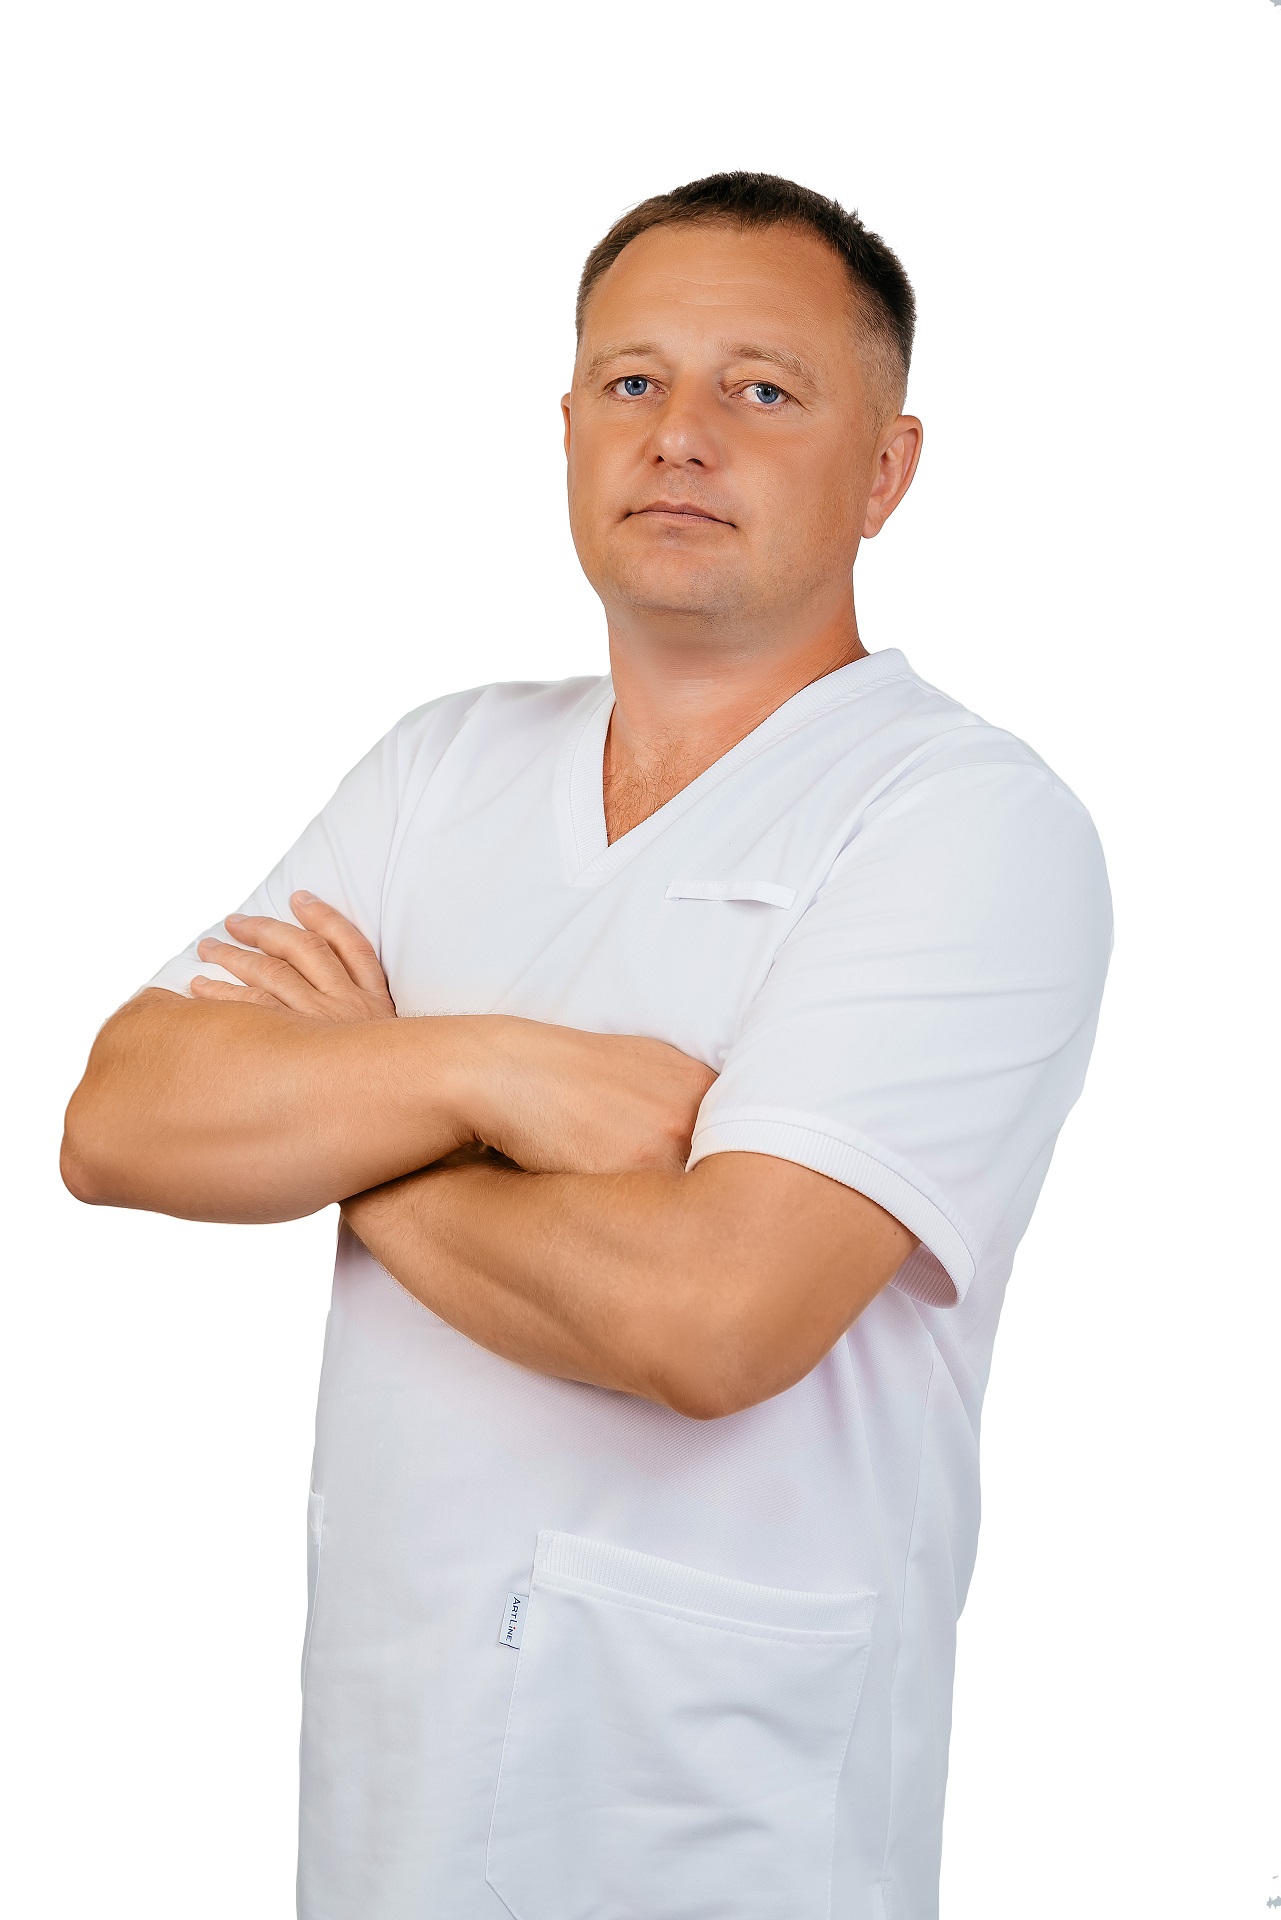 Сашнин Алексей Михайлович - Врач стоматолог, ортопед